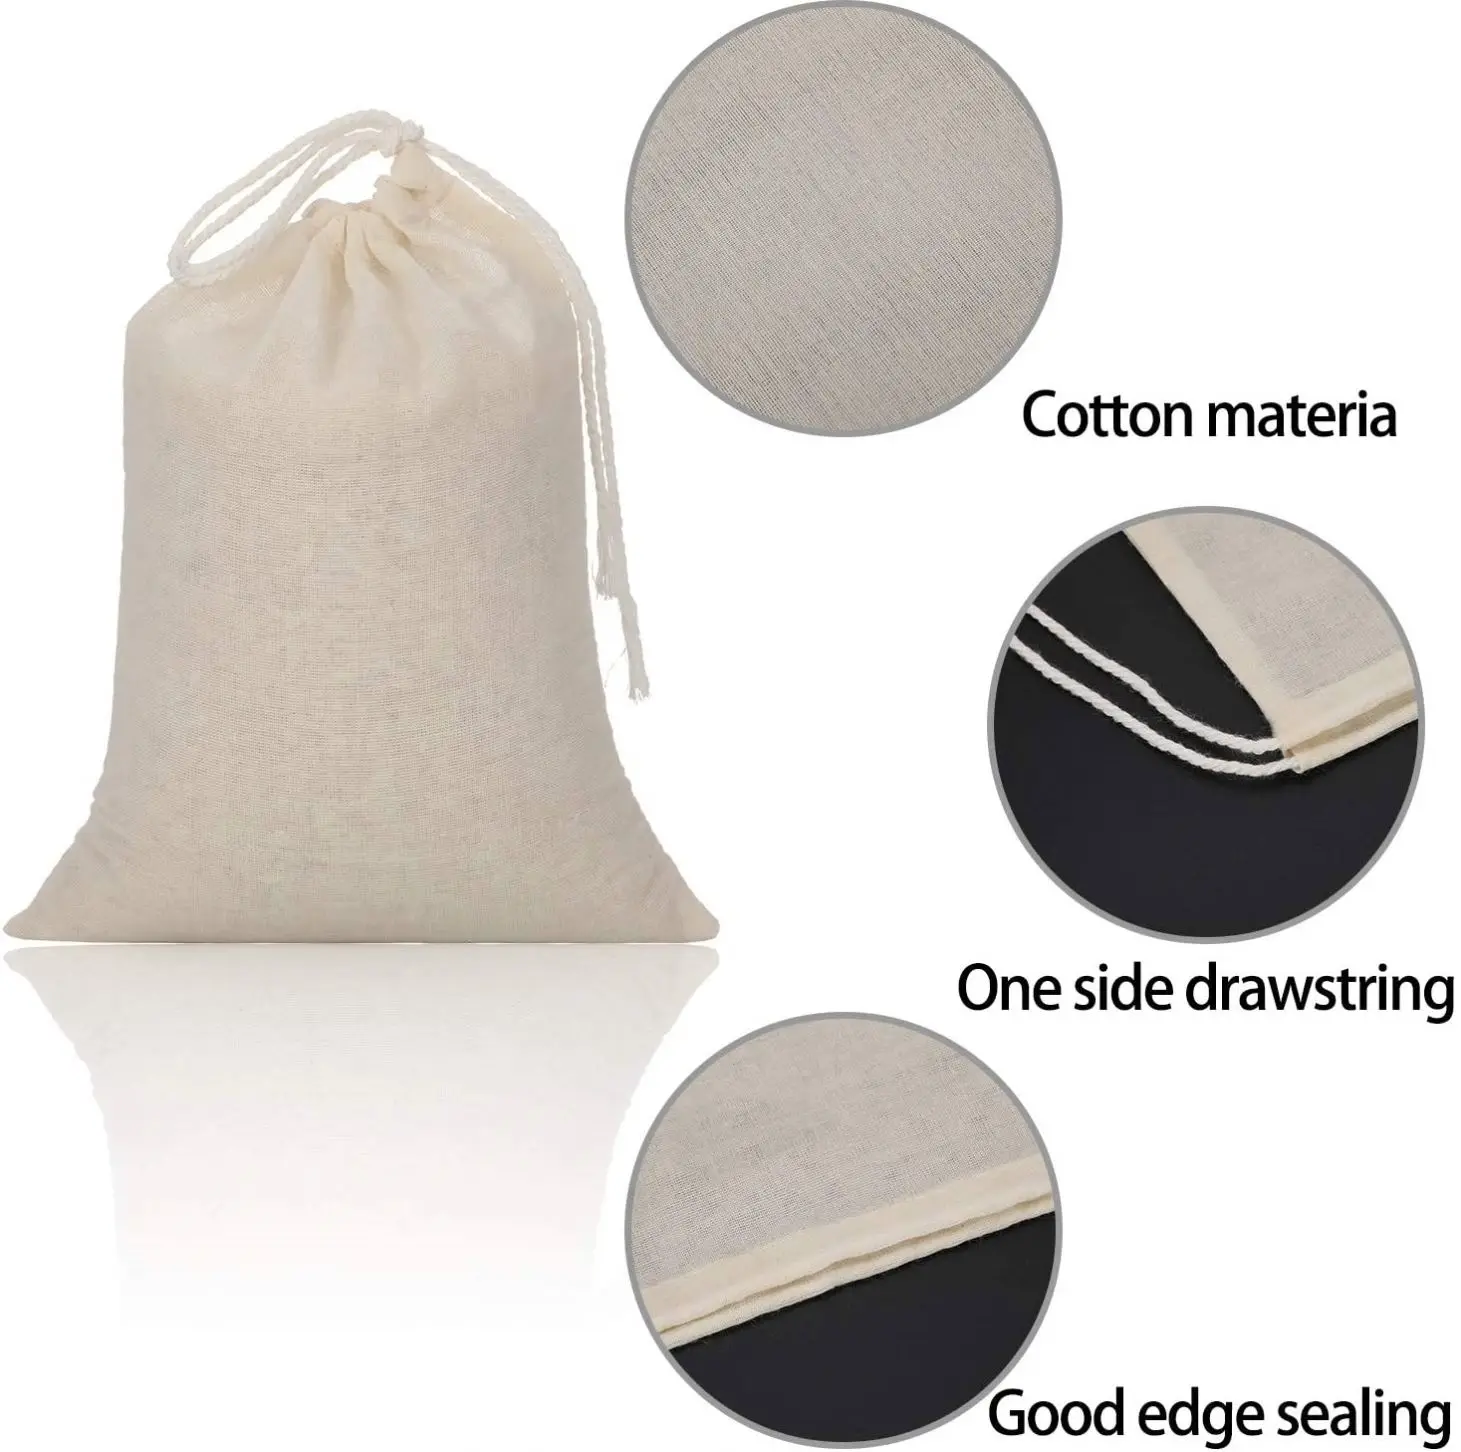 50 Pieces Cotton Drawstring Bags Muslin Bag Sachet Bag For Home Supplies Small-Medium-Large